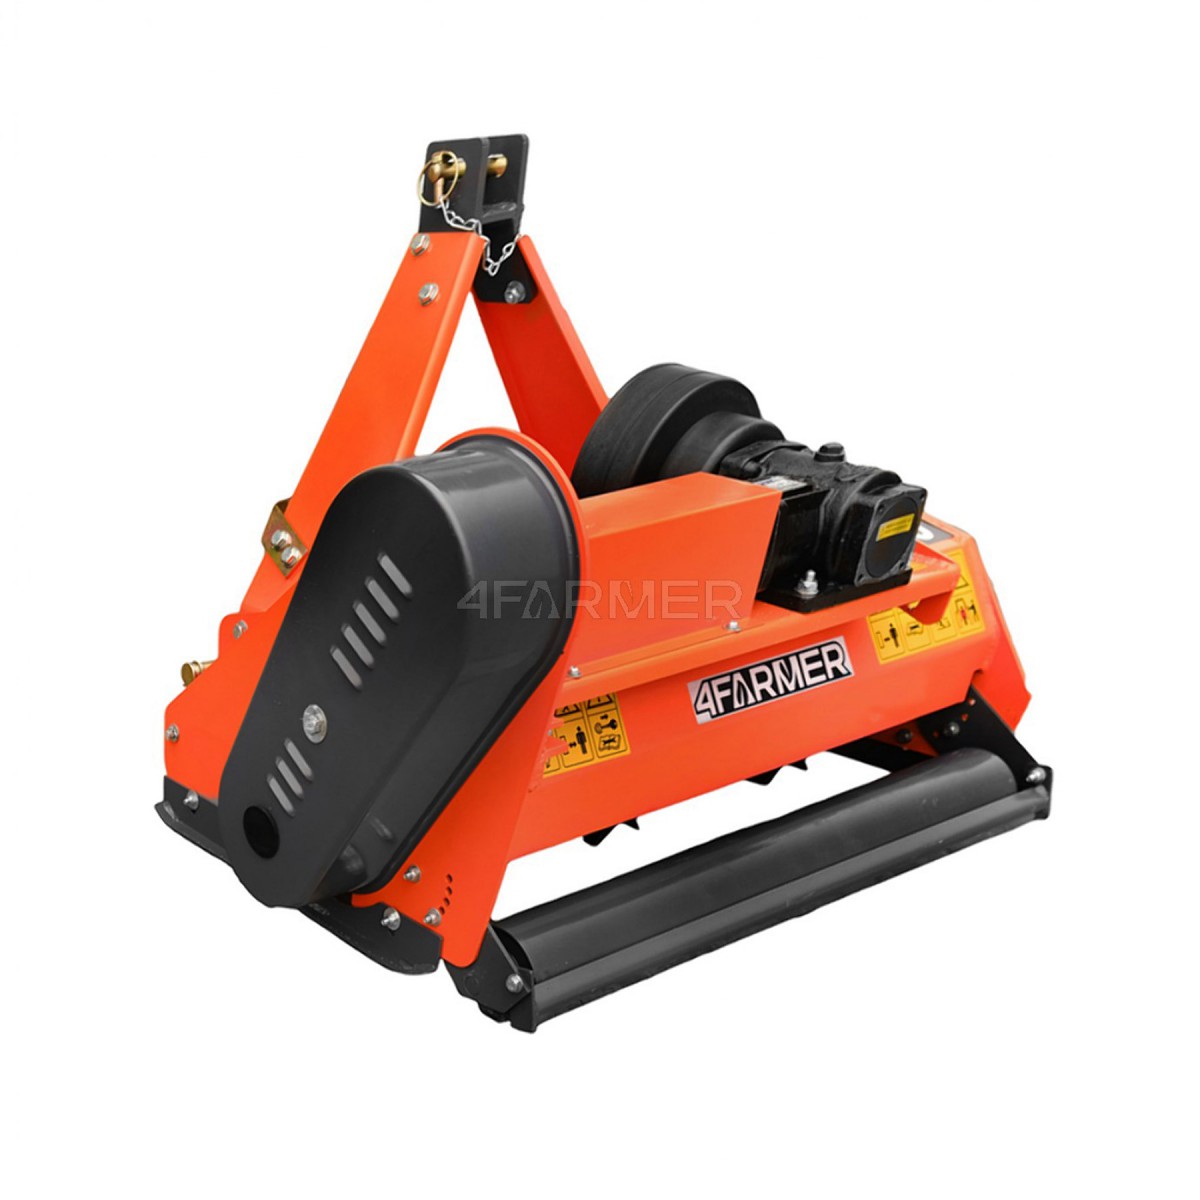 Flail mower EF 95 4FARMER - orange